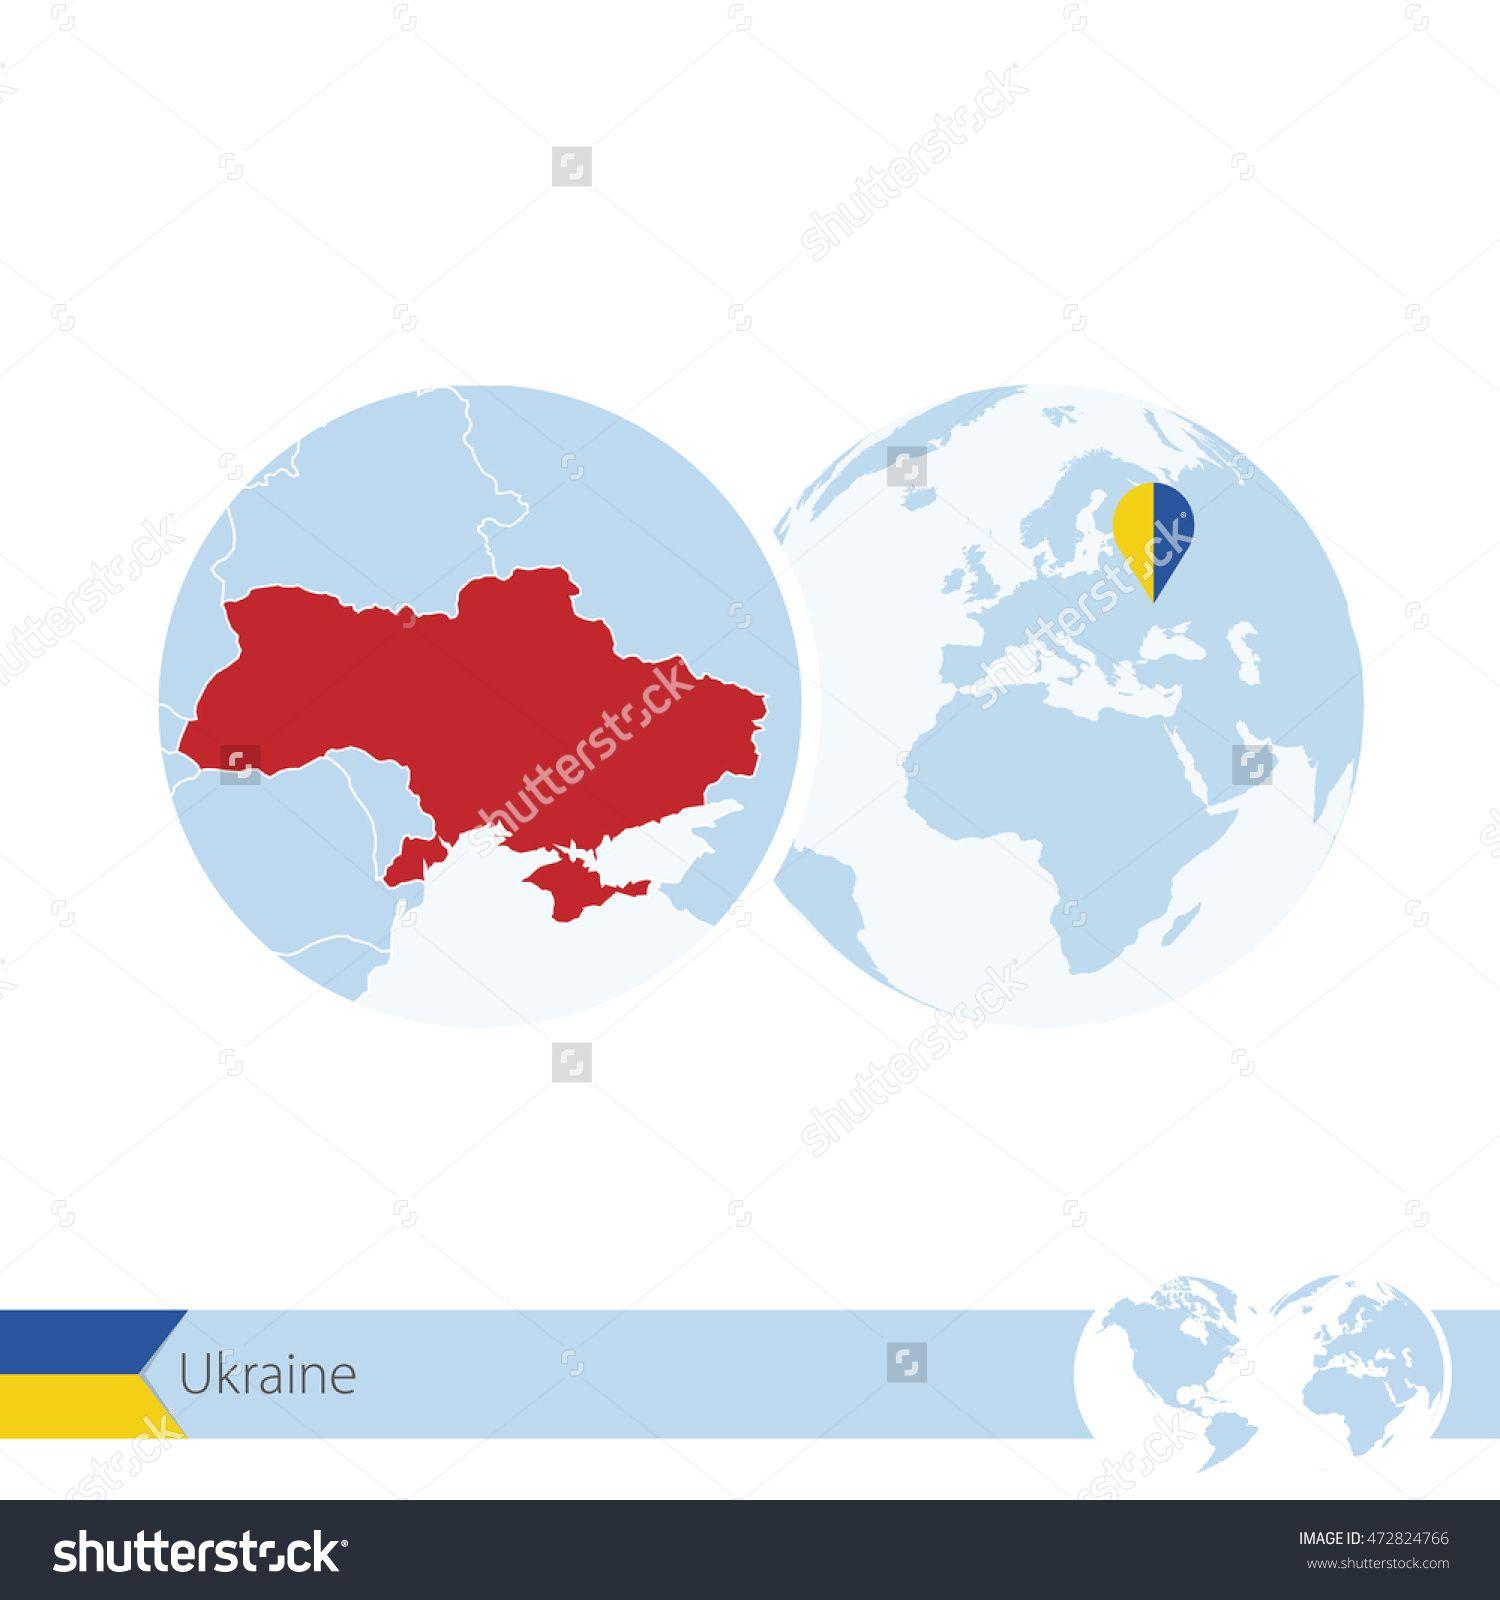 Flags World Globe Logo - Ukraine On World Globe With Flag And Regional Map Of Ukraine. Vector ...